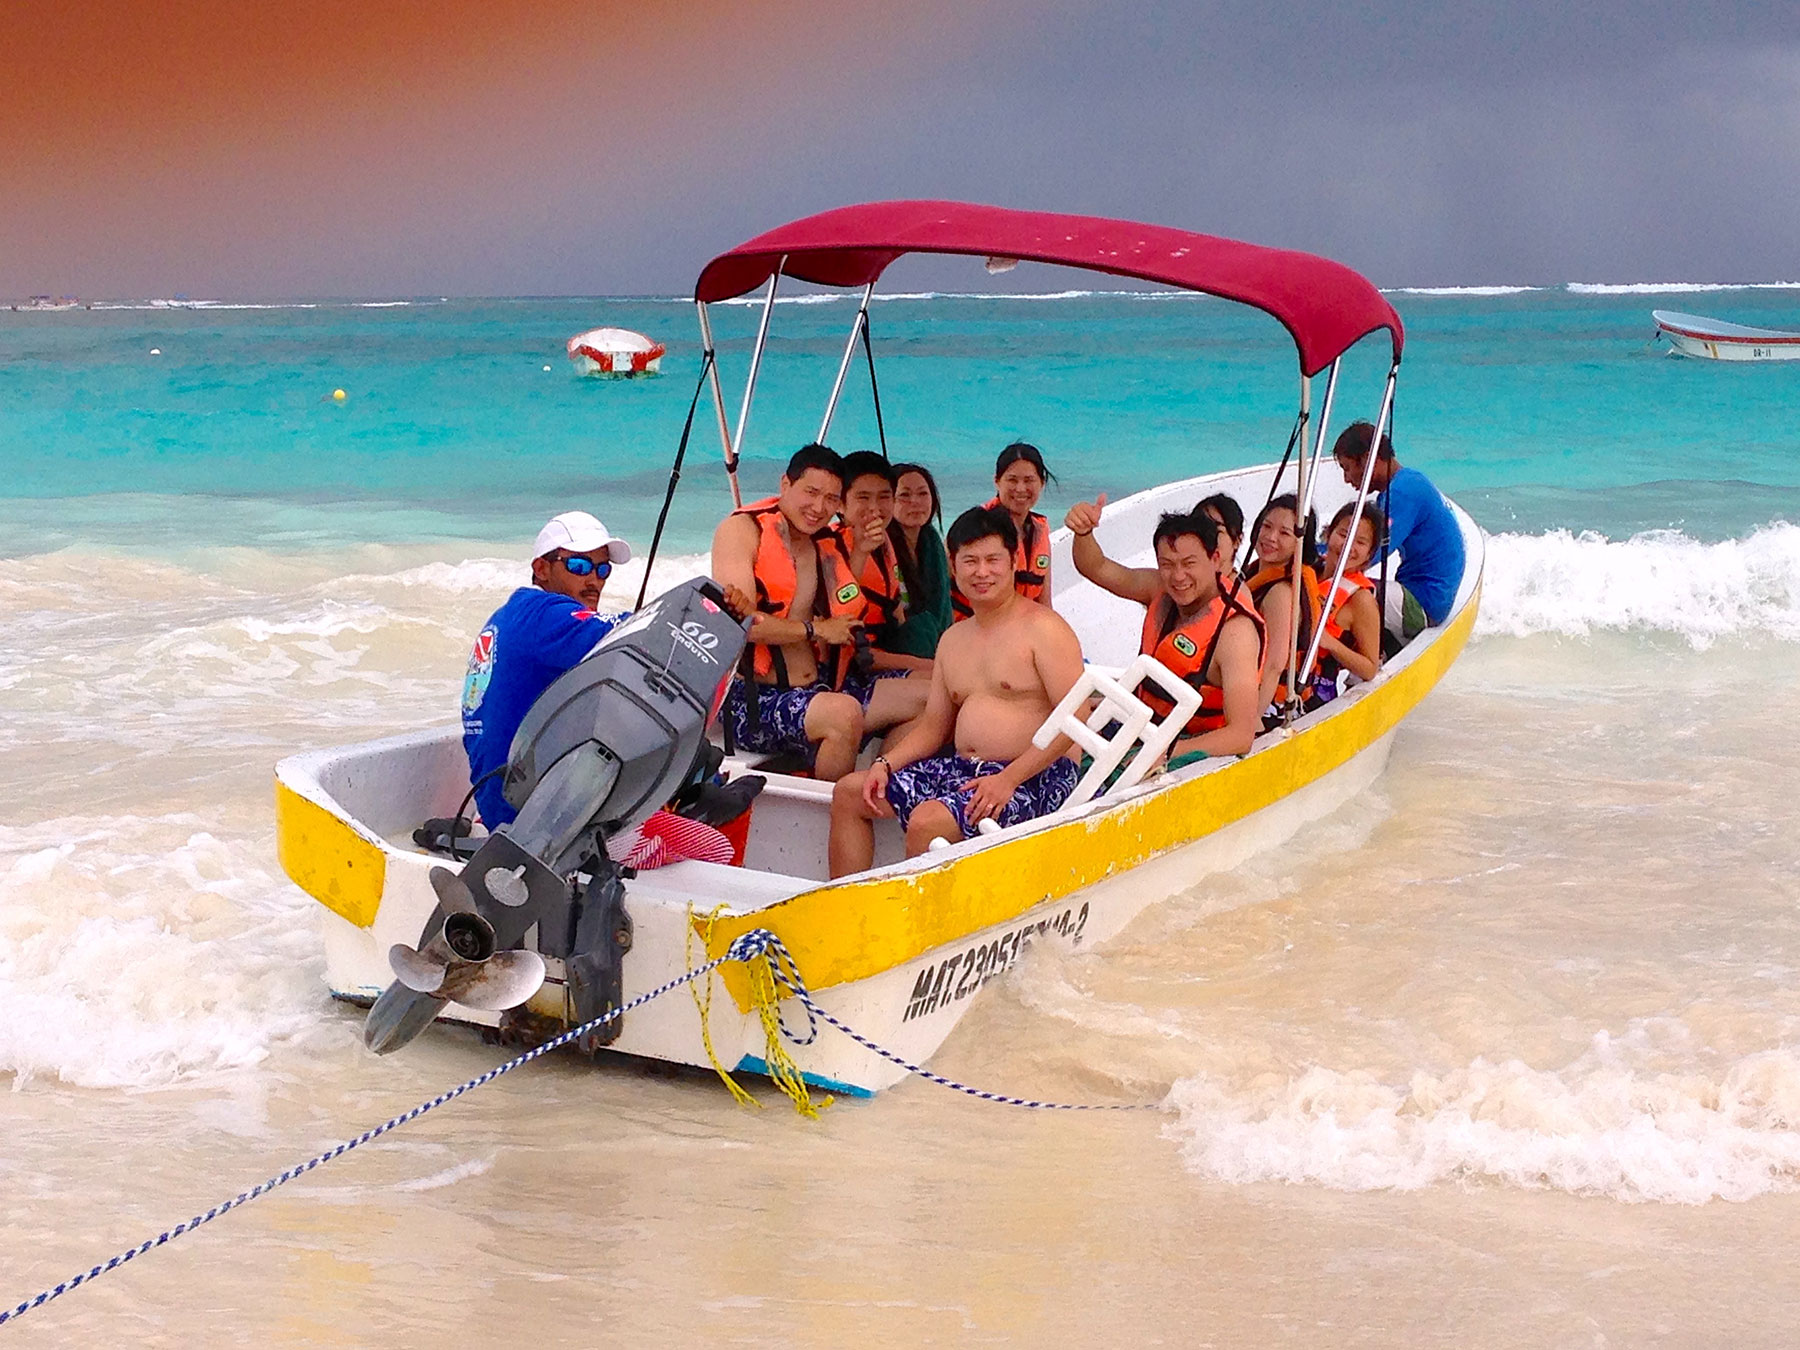 Tulum Ruins & Boat Snorkel | Group Discount Rate $245.00 US dollars per person